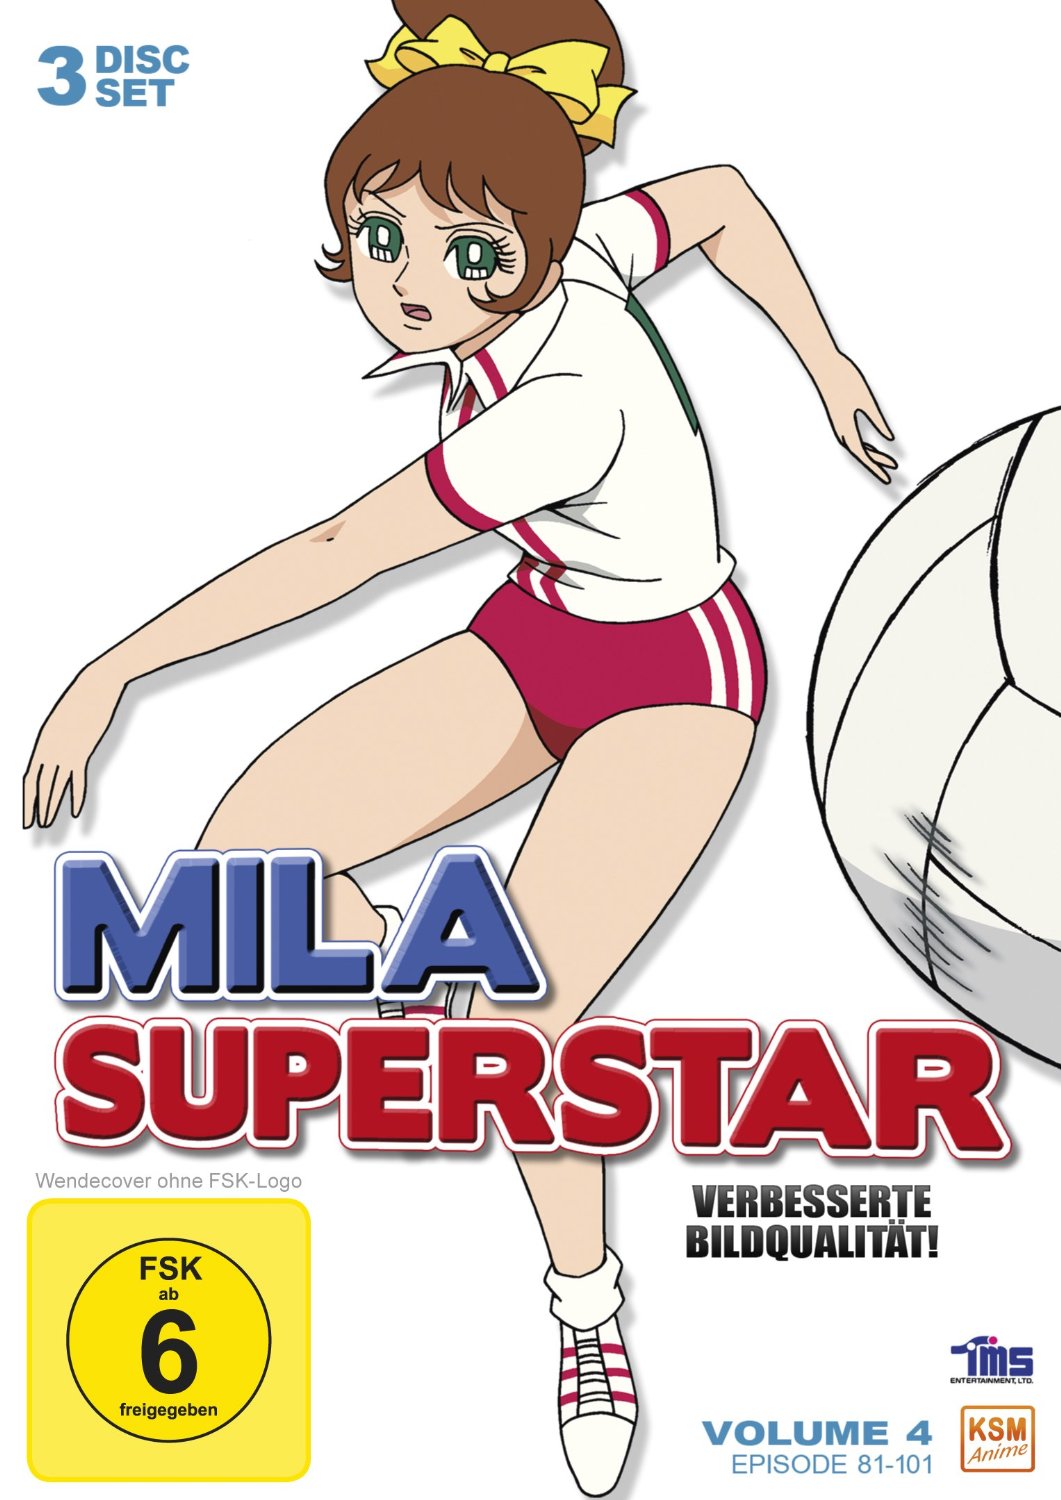 Mila Superstar - Volume 4: Episode 81-101 [DVD] Cover